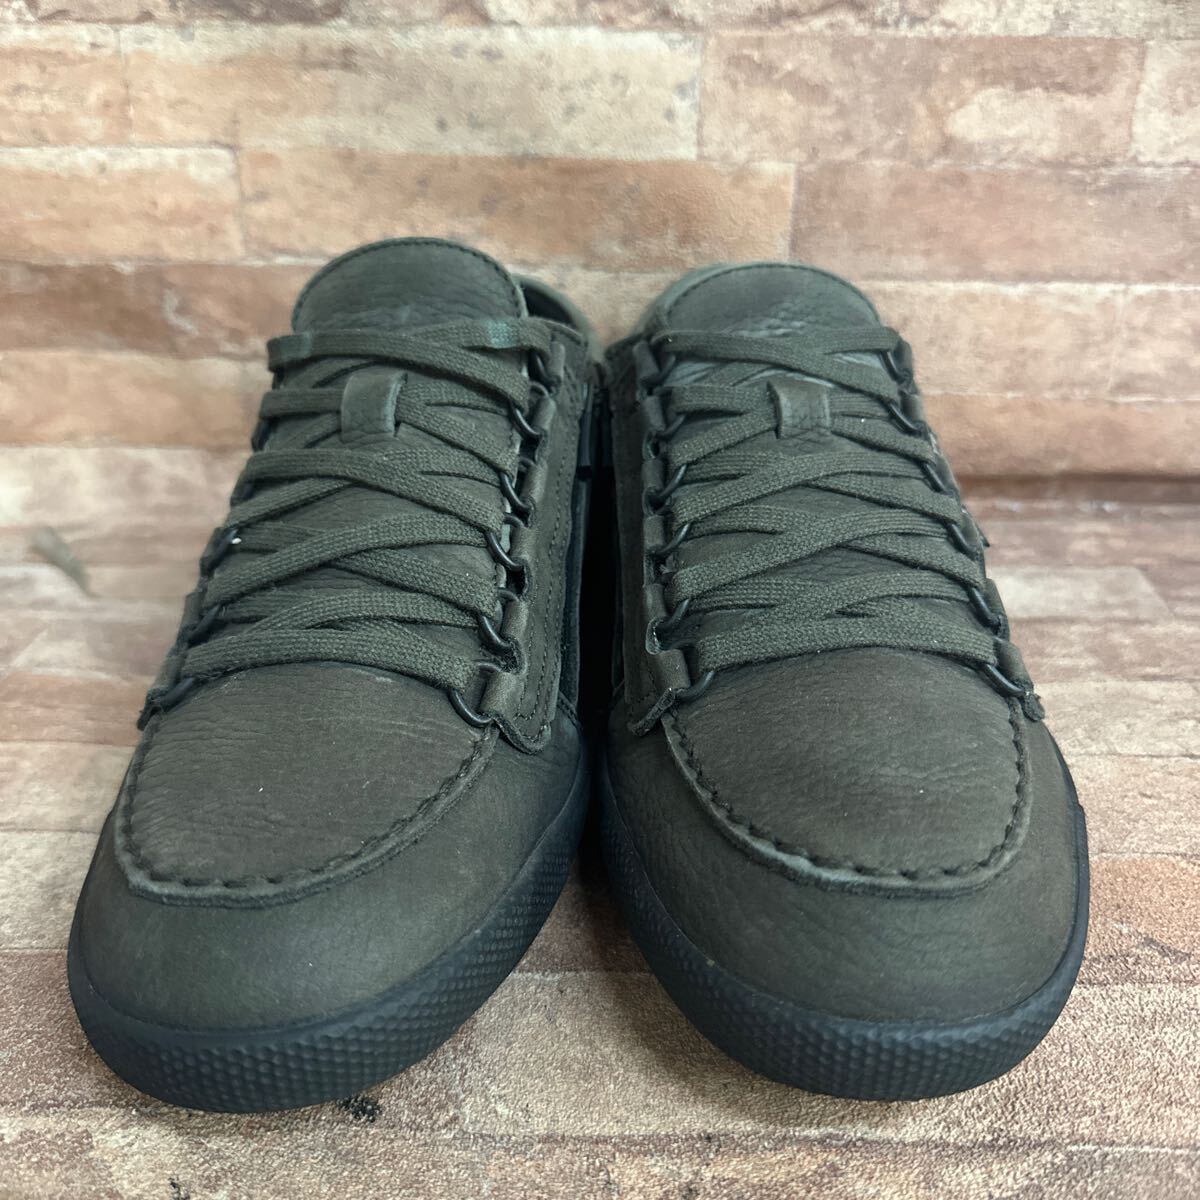 mefi -stroke MEPHISTO CRUISER Cruiser natural leather business shoes walking shoes EU7 US7.5 25.5cm